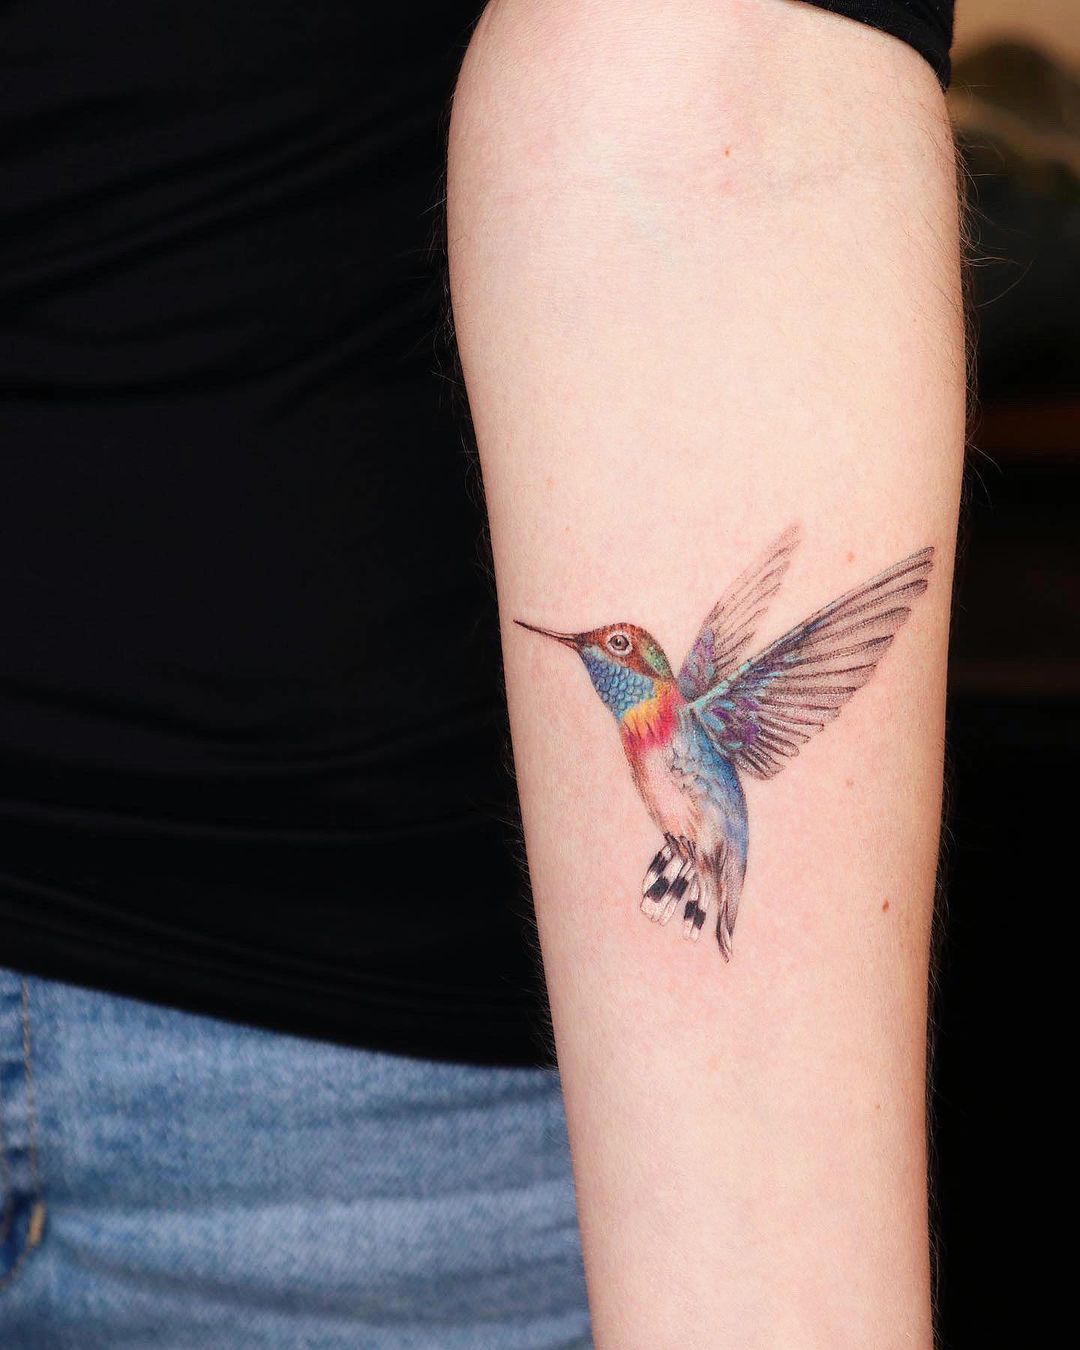 Colorful Hummingbird Tattoo on Arm